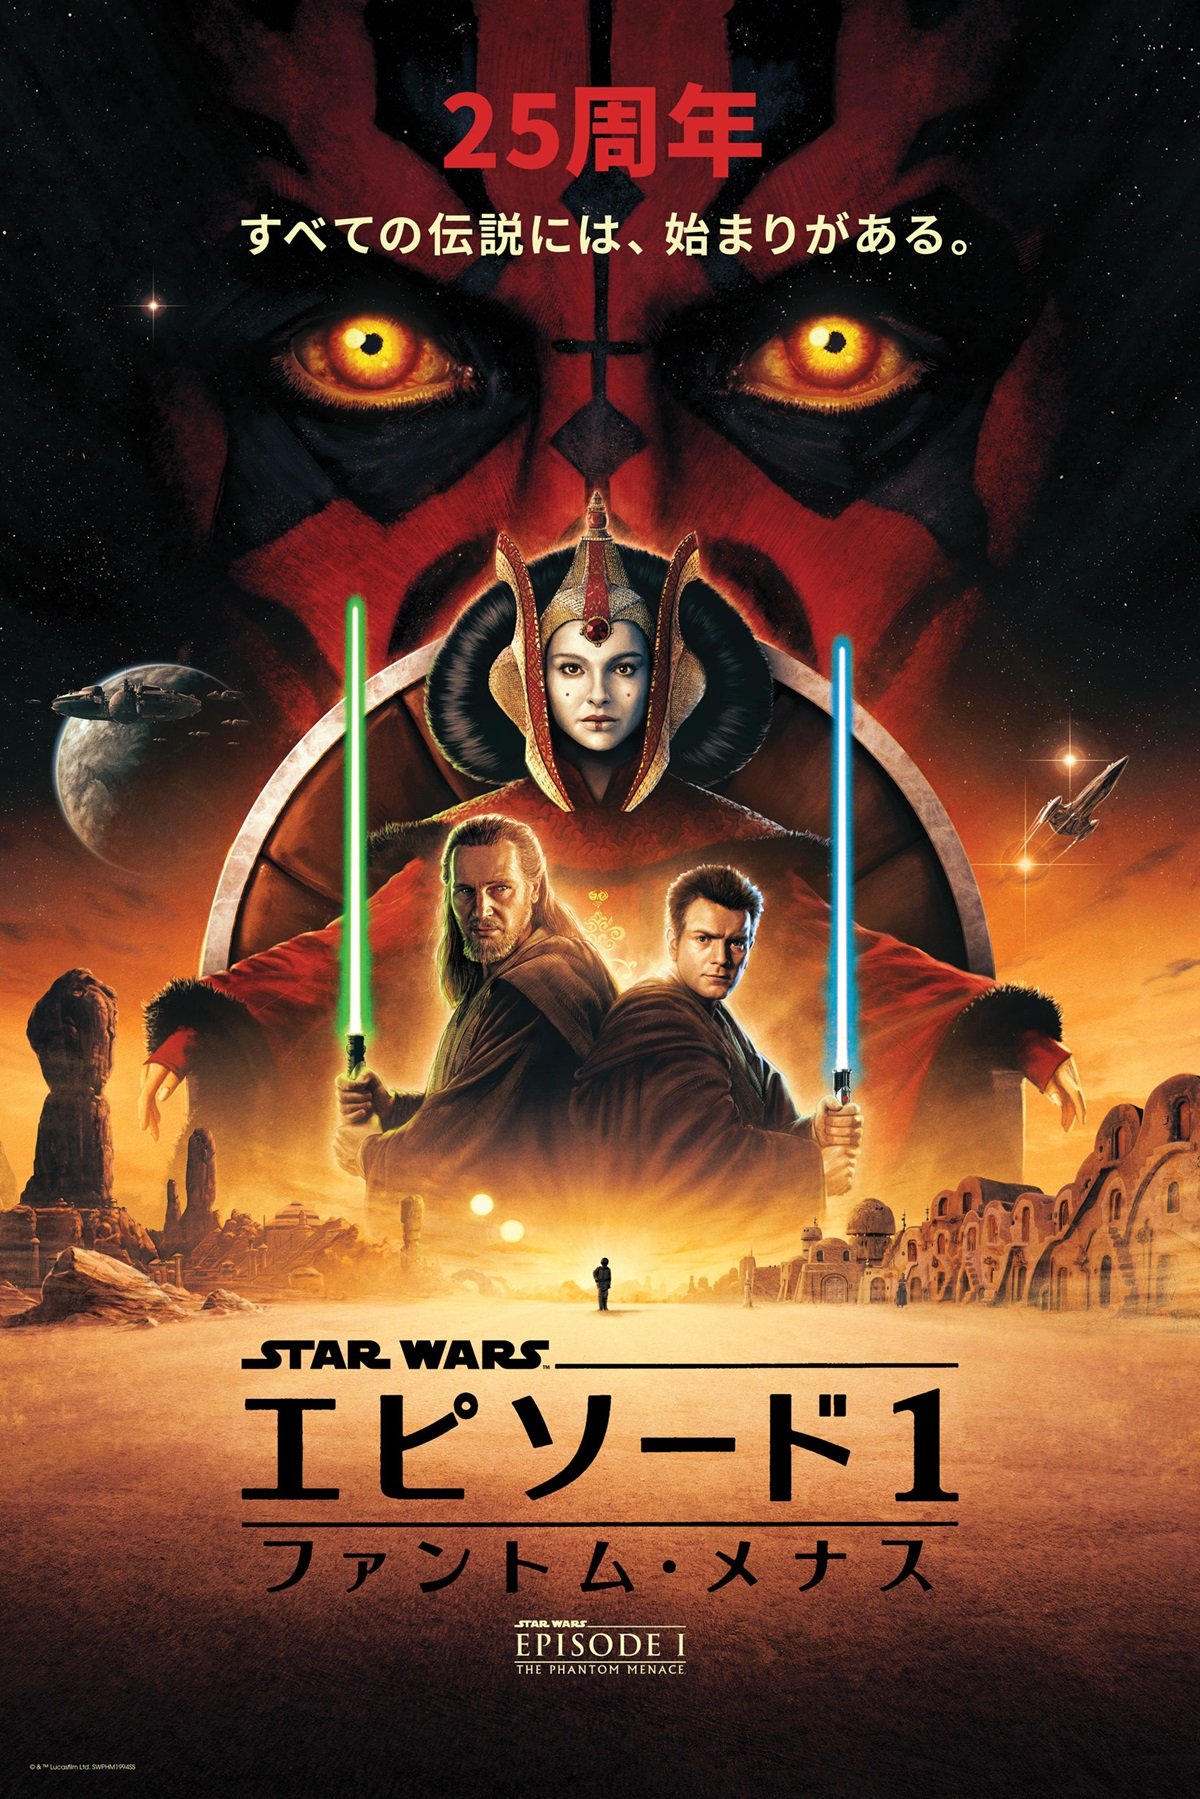 Matt Ferguson's Star Wars: Episode I - The Phantom Menace 25th anniversary poster, Japanese edition. 